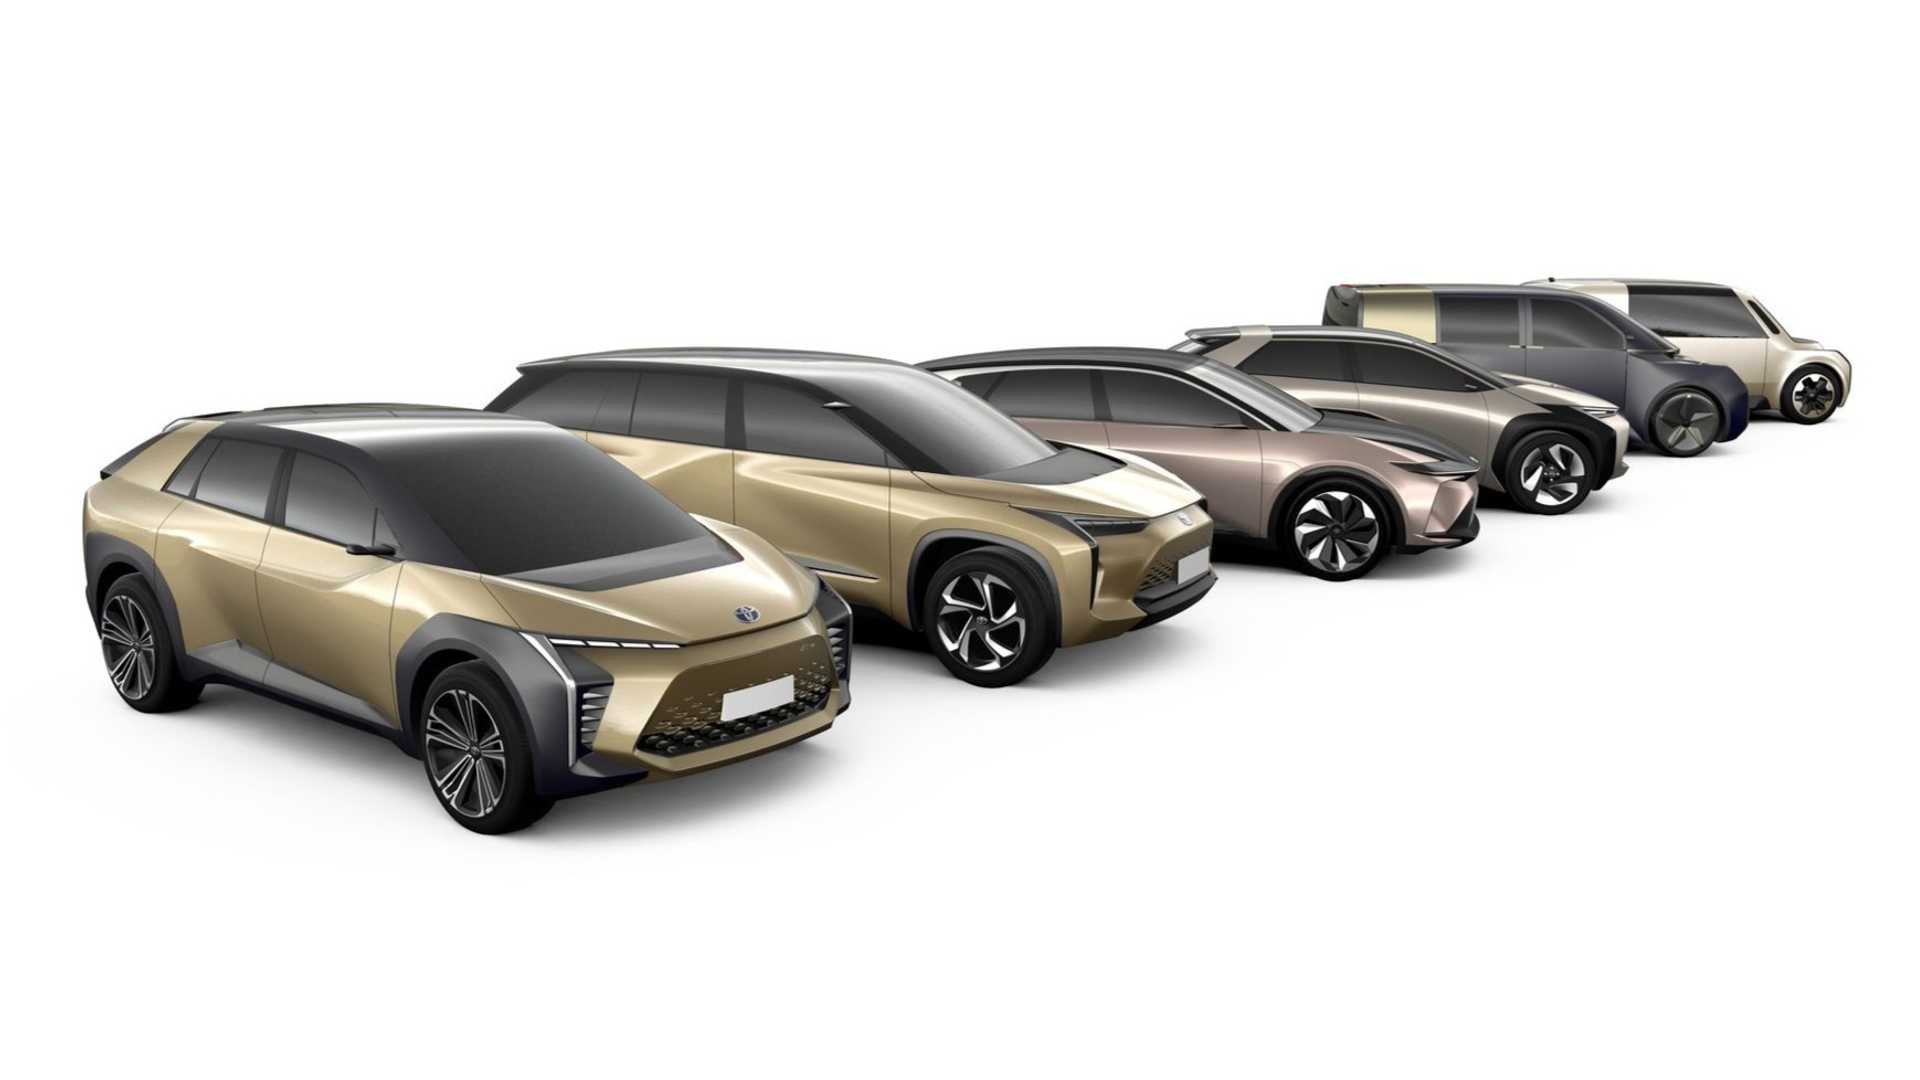 Toyota raize 2020 - фото, цена и характеристики кроссовера